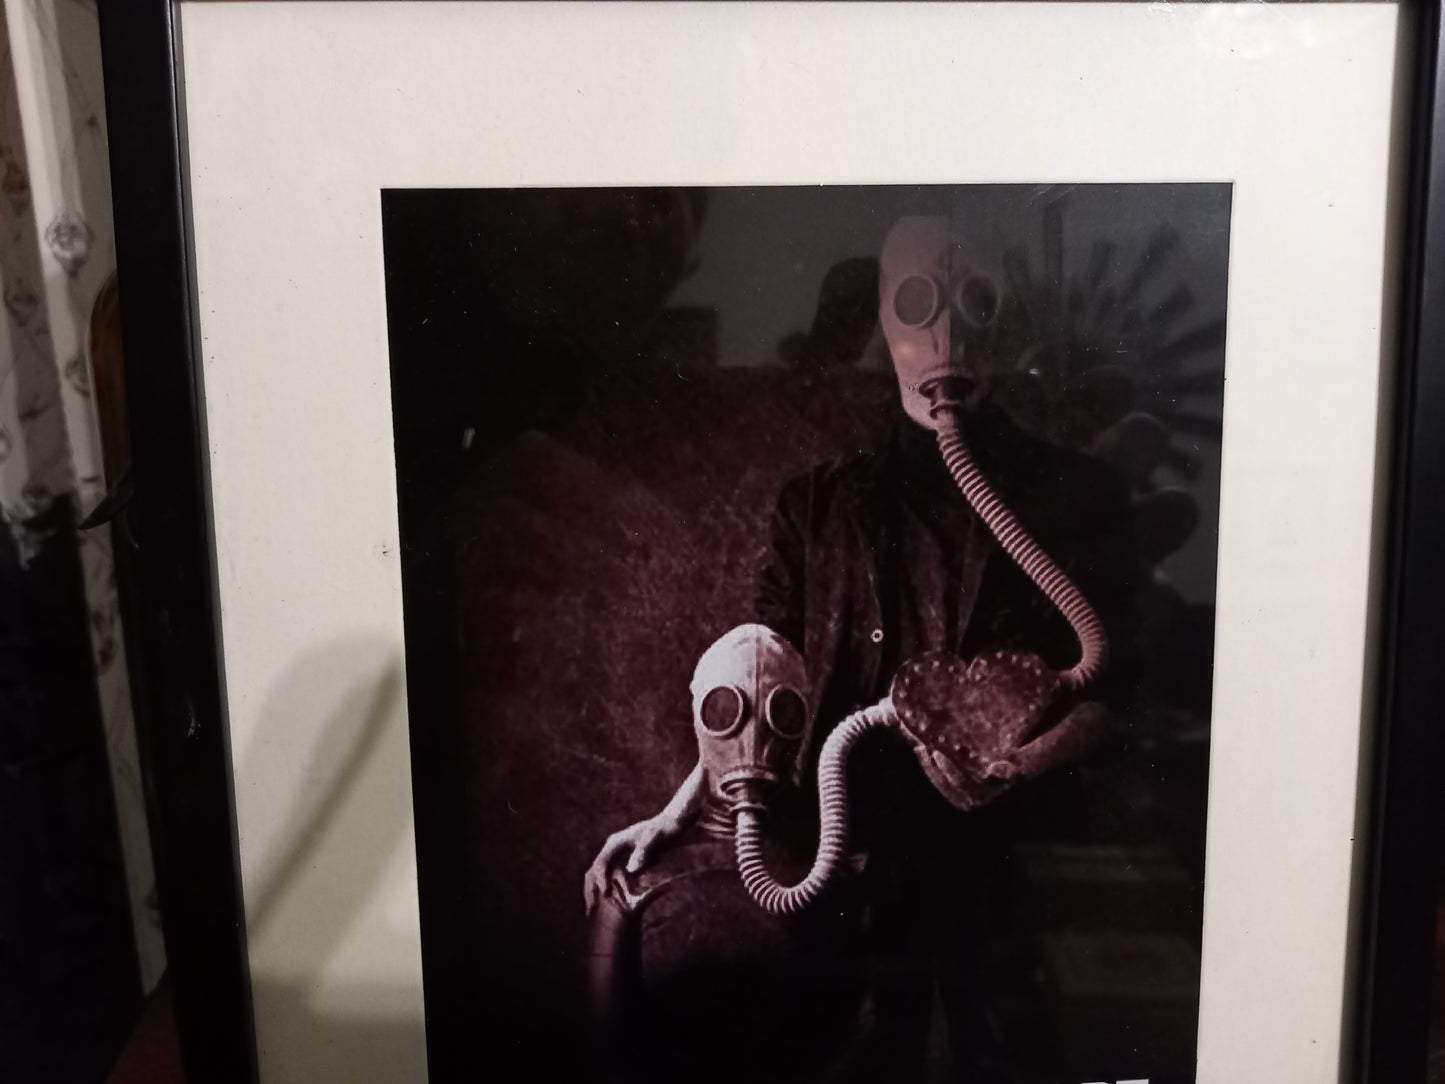 Oddity Curiosity macabre fetish BDSM romantic goth gothic witchy "Till Death us do Part" framed art